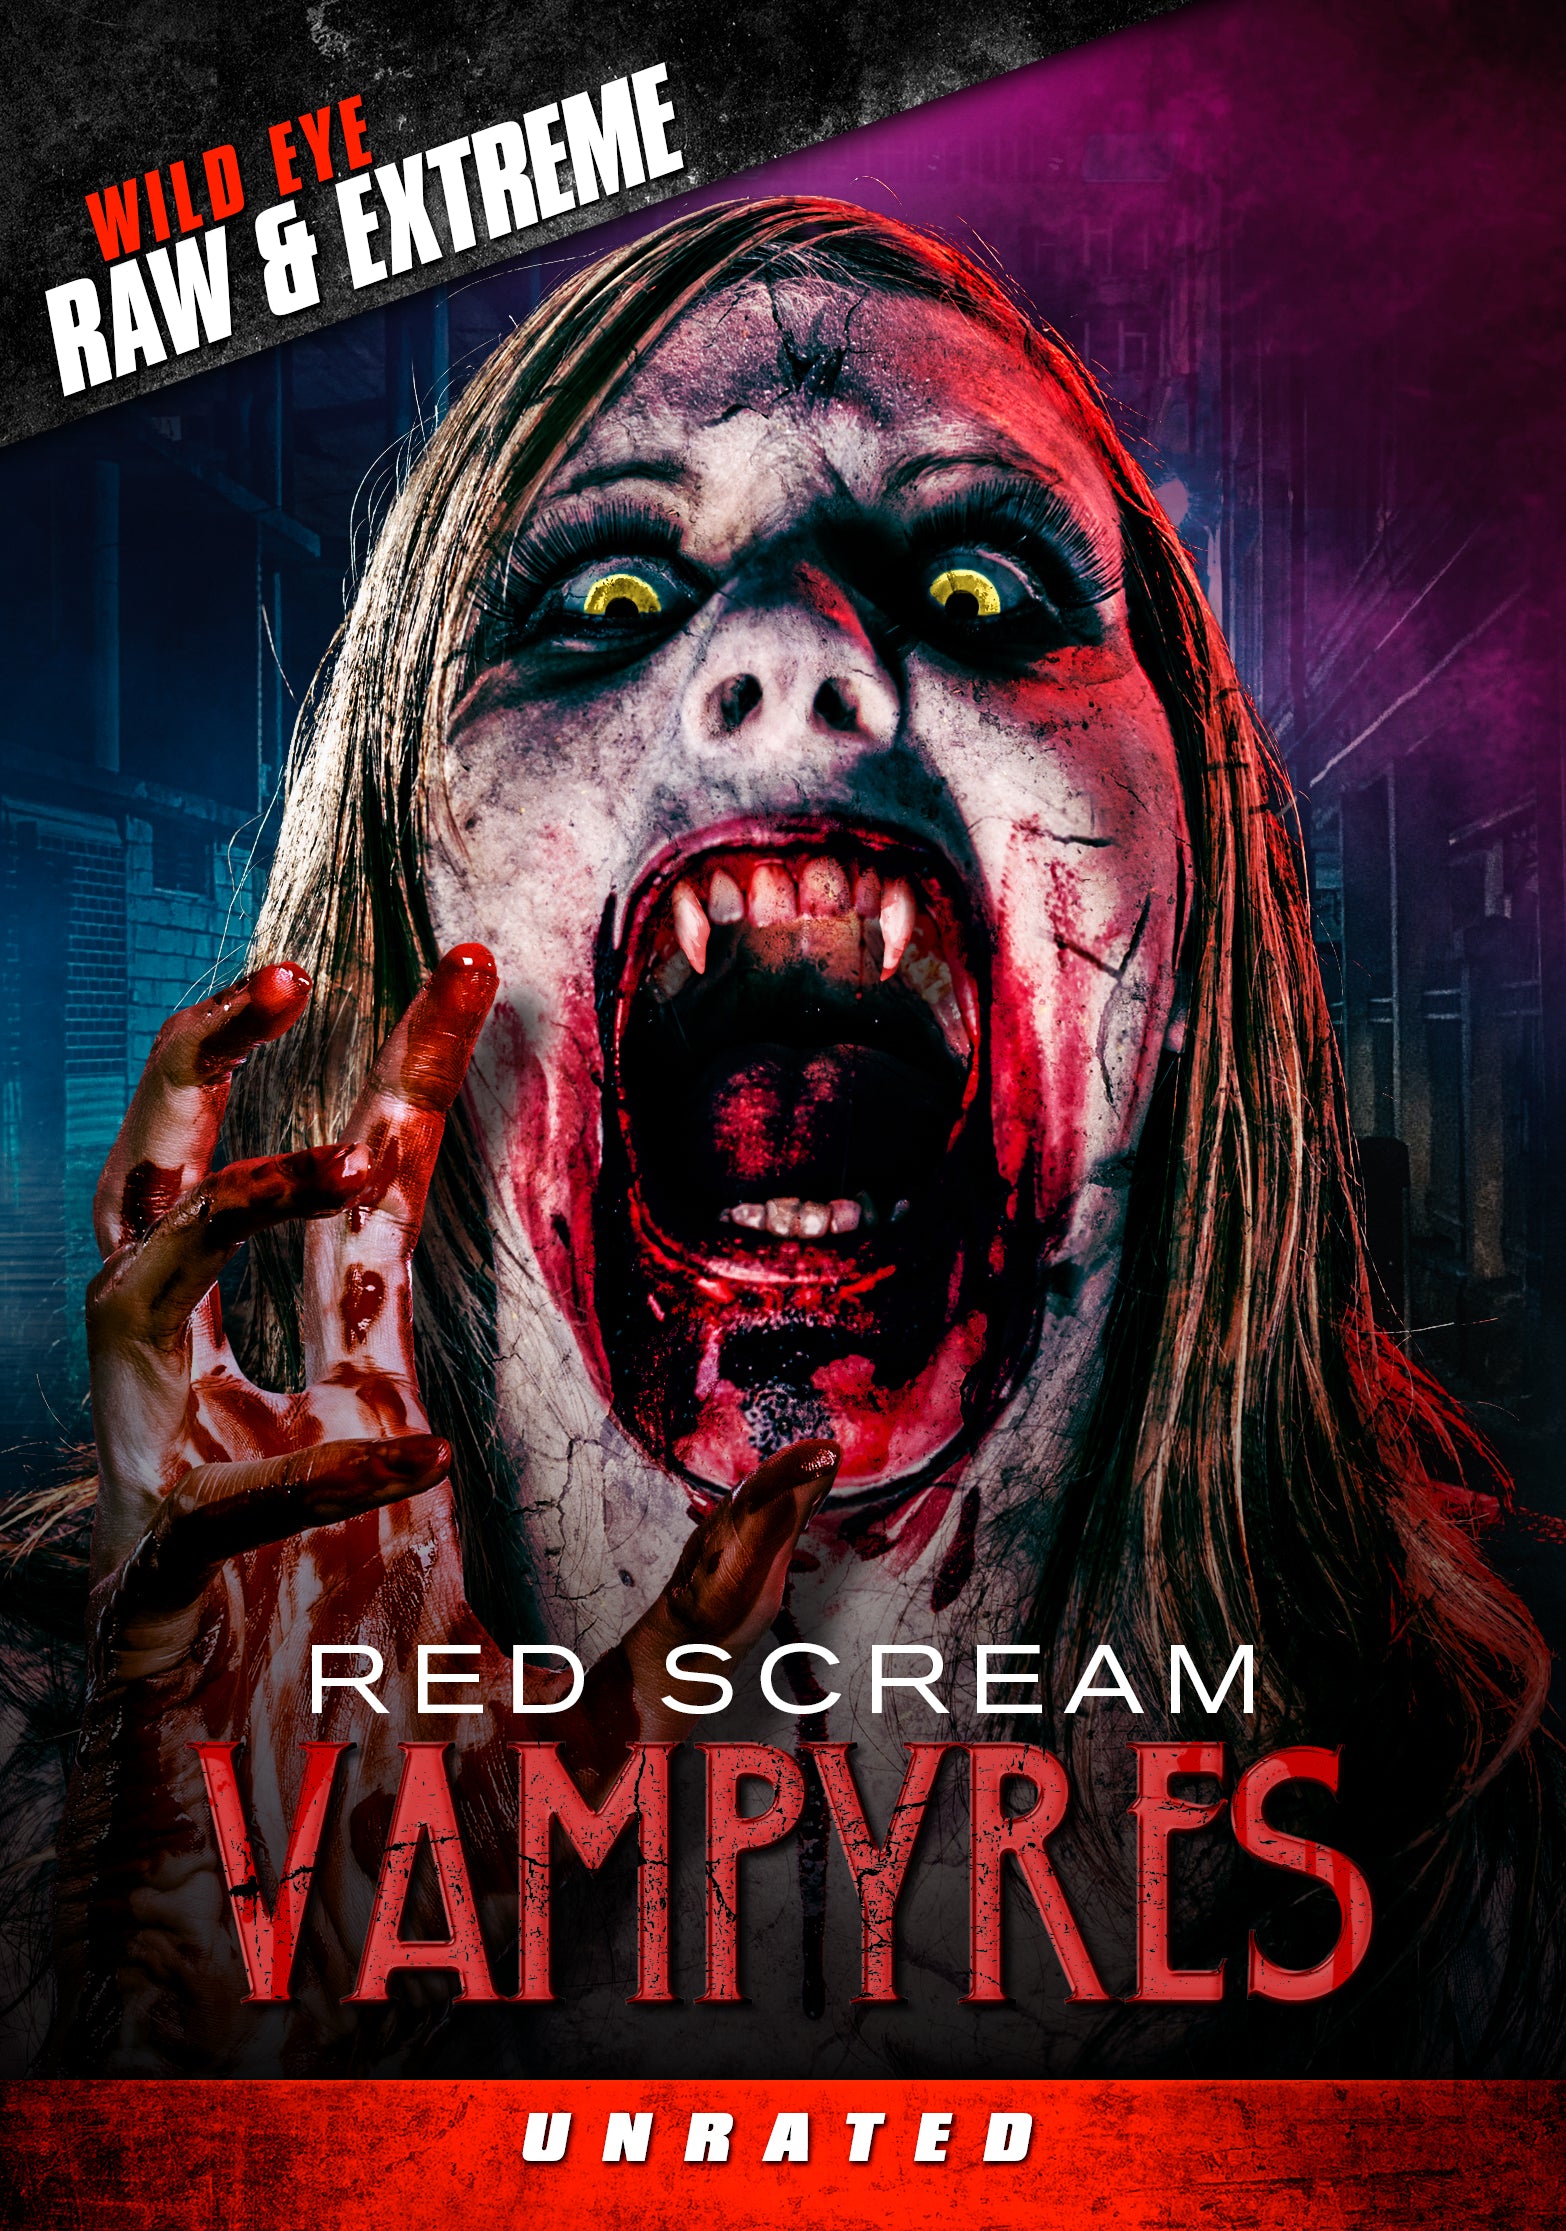 RED SCREAM VAMPYRES DVD